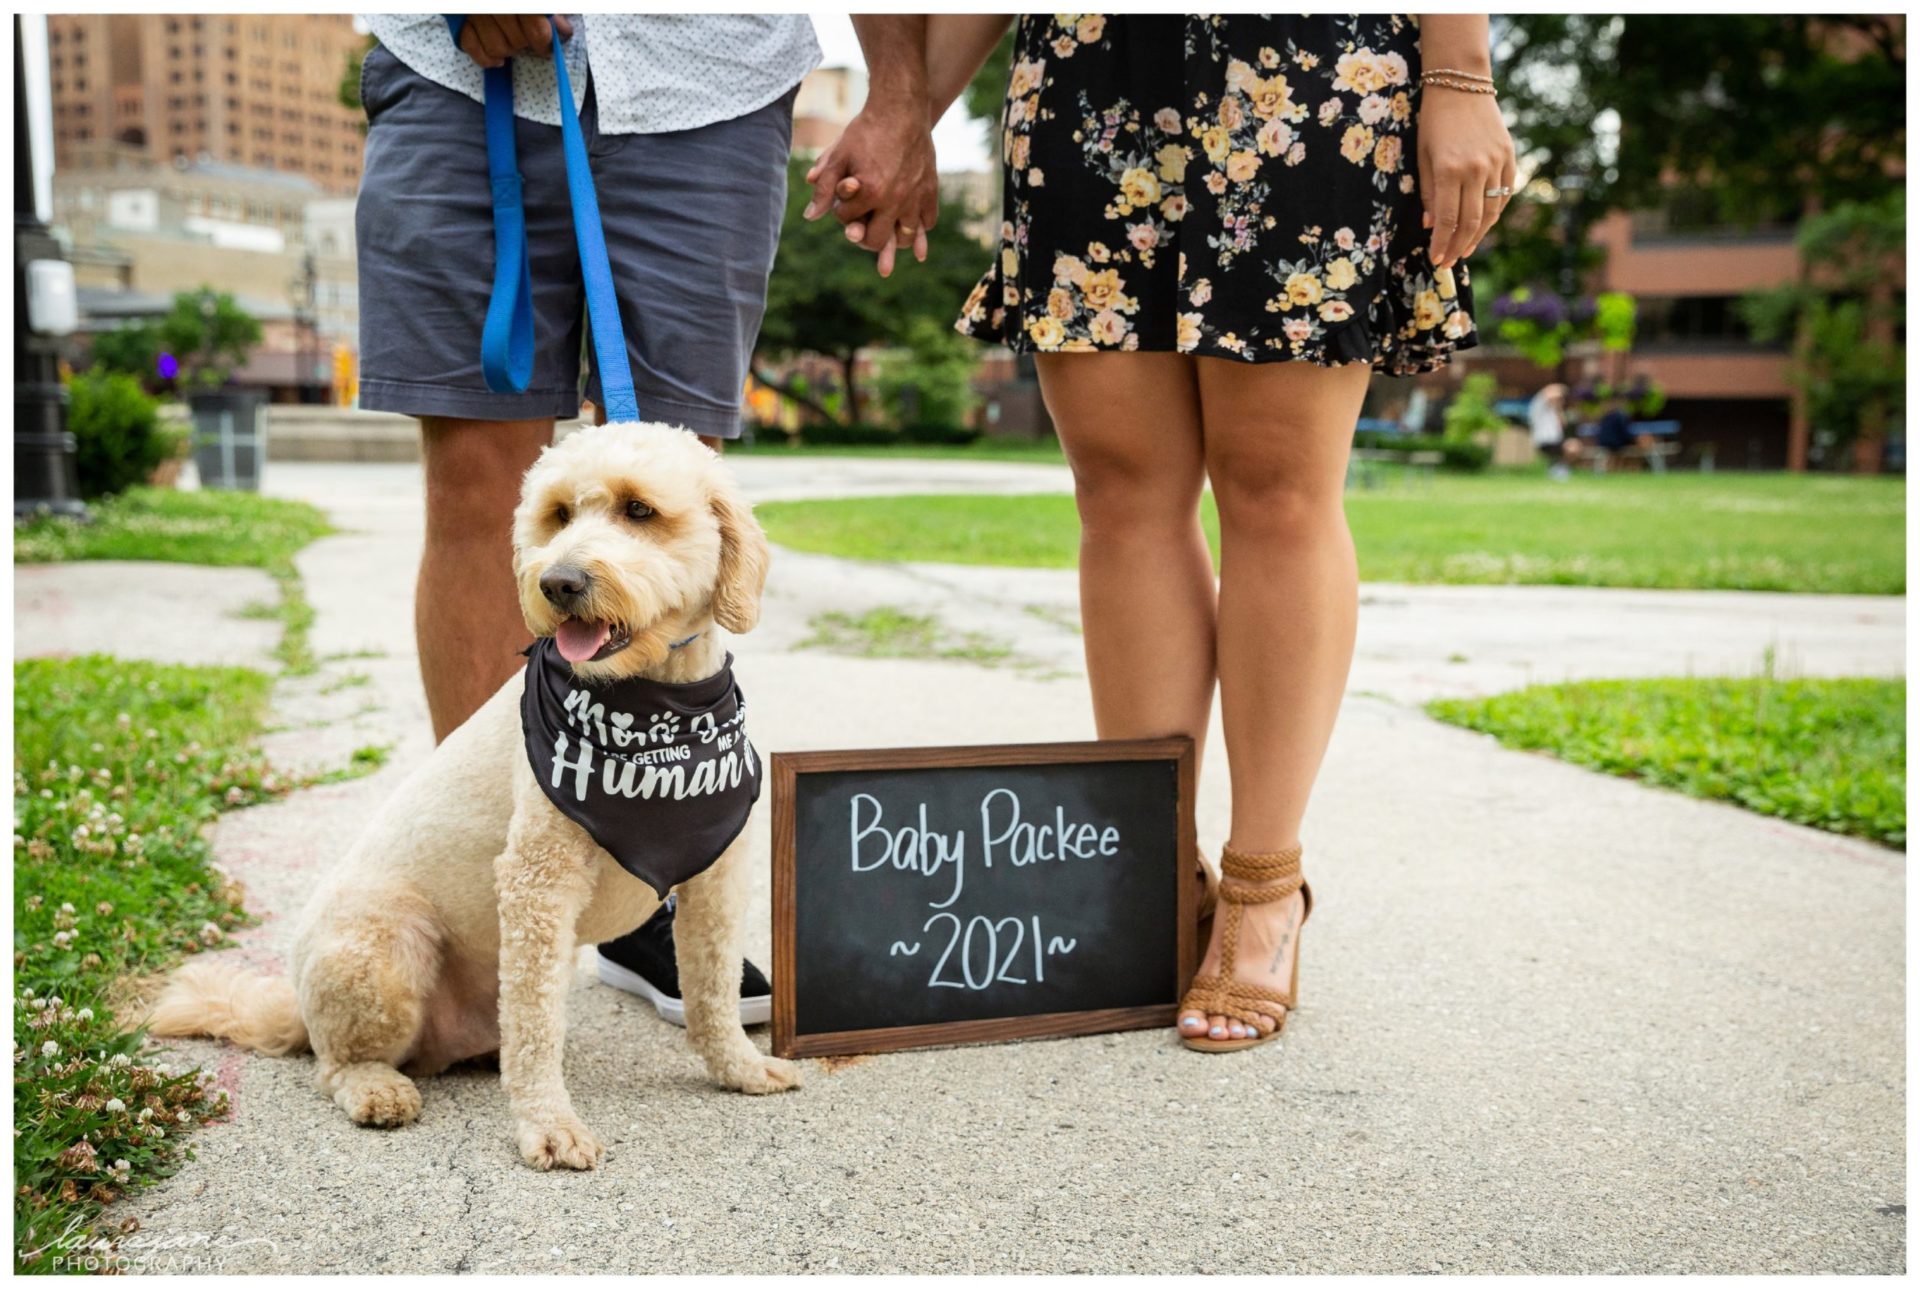 Pregnancy announcement photo ideas with pets